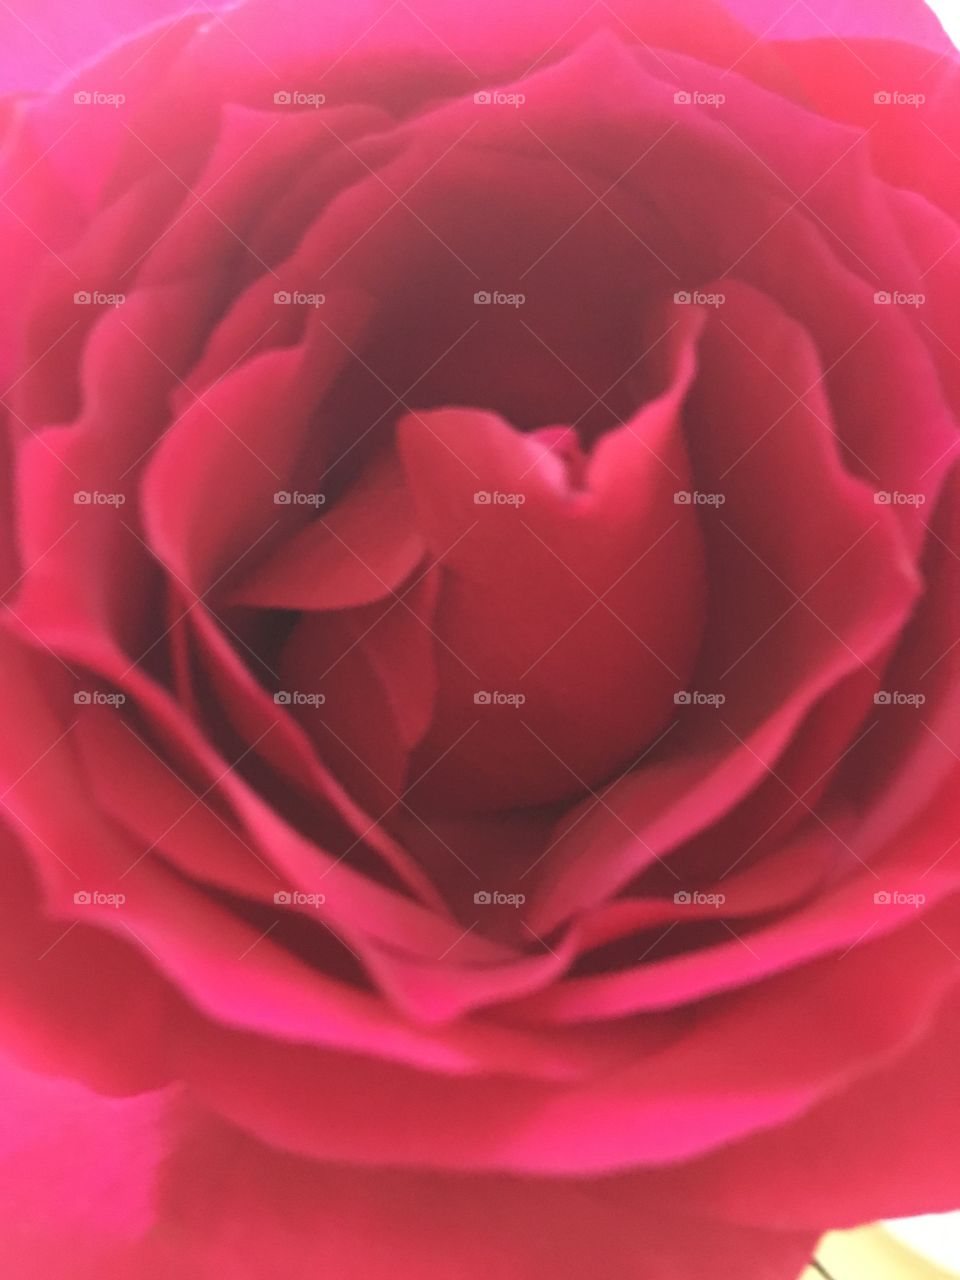 Rose, Flower, Petal, Romance, Love